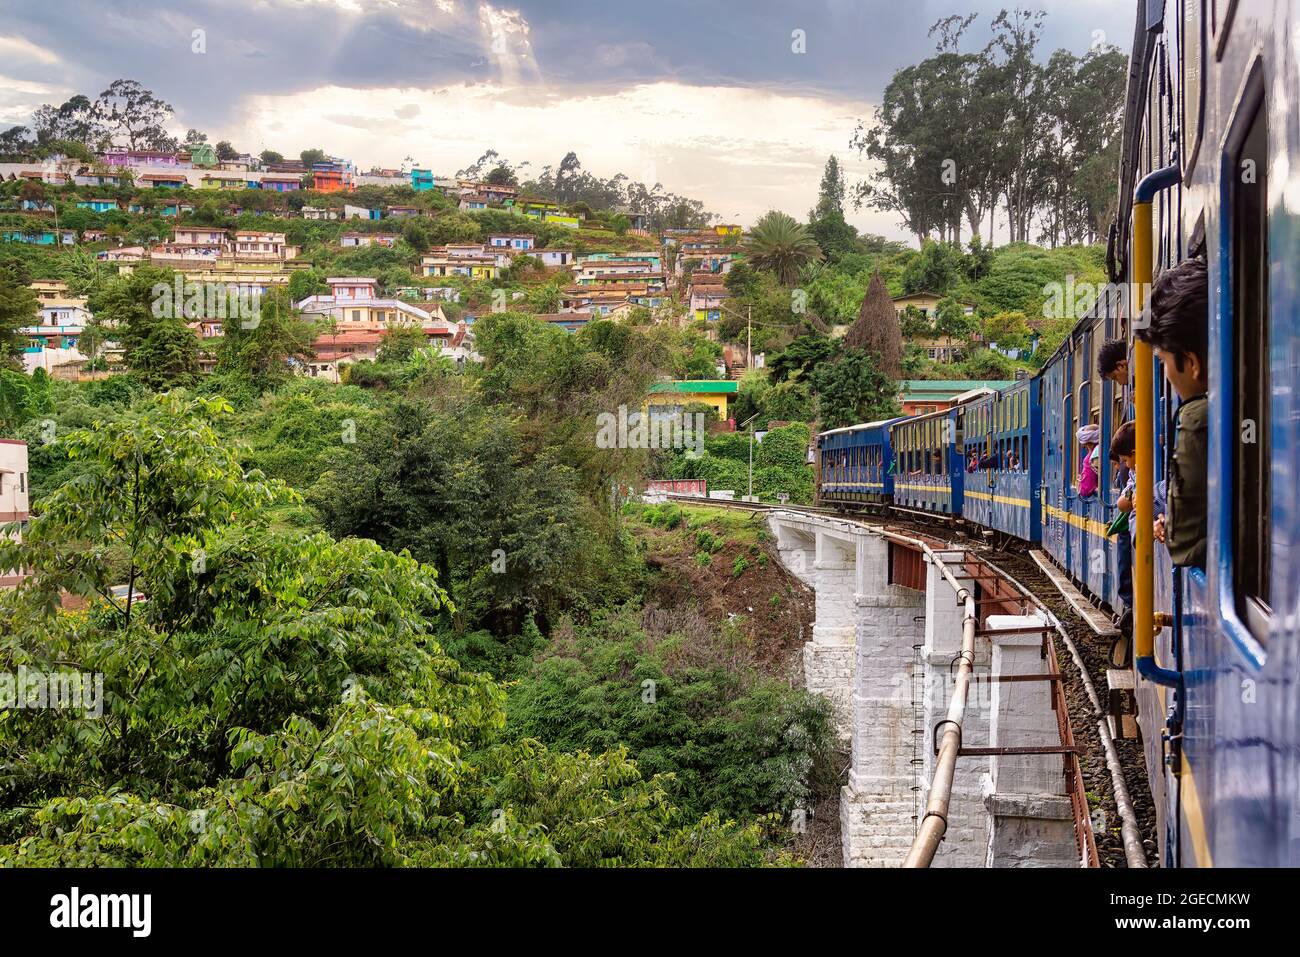 Wellington, India - August 24, 2018: View of passengers in travel on the Nilgiri Mountain Railway train Stock Photo